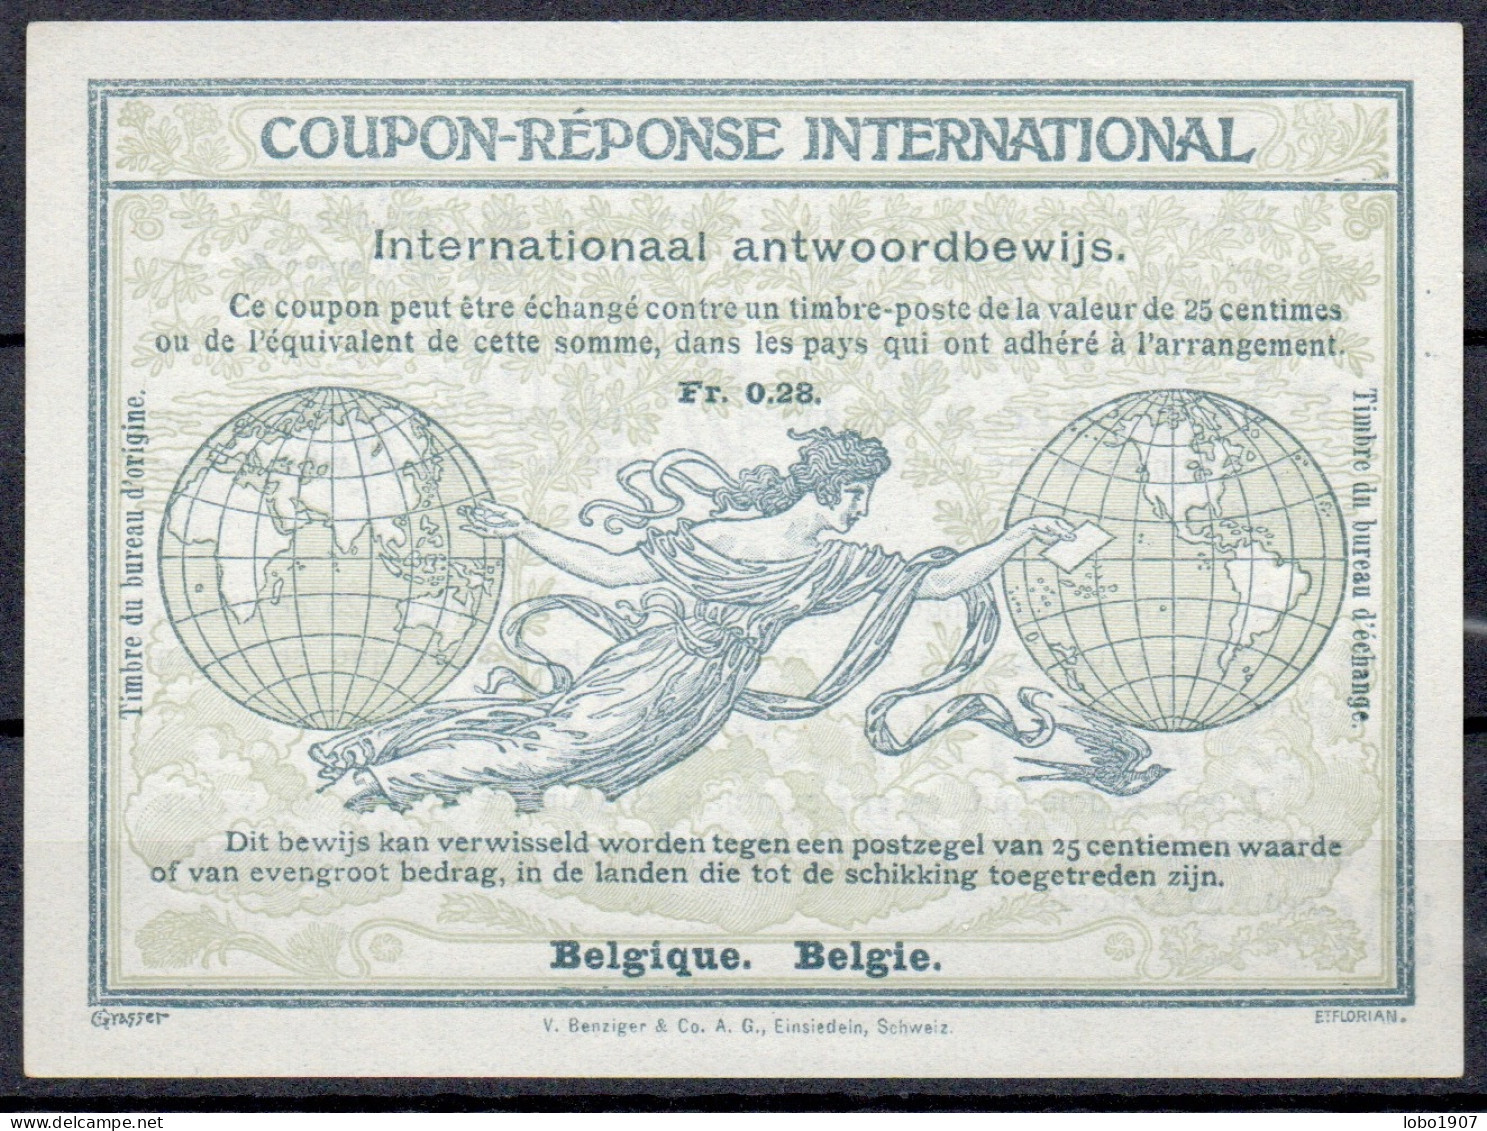 BELGIQUE BELGIE BELGIUM  Ro4  Fr. 0.28  International Reply Coupon Reponse Antwortschein IRC IAS Cupon Respuesta  Mint * - Coupons-réponse Internationaux